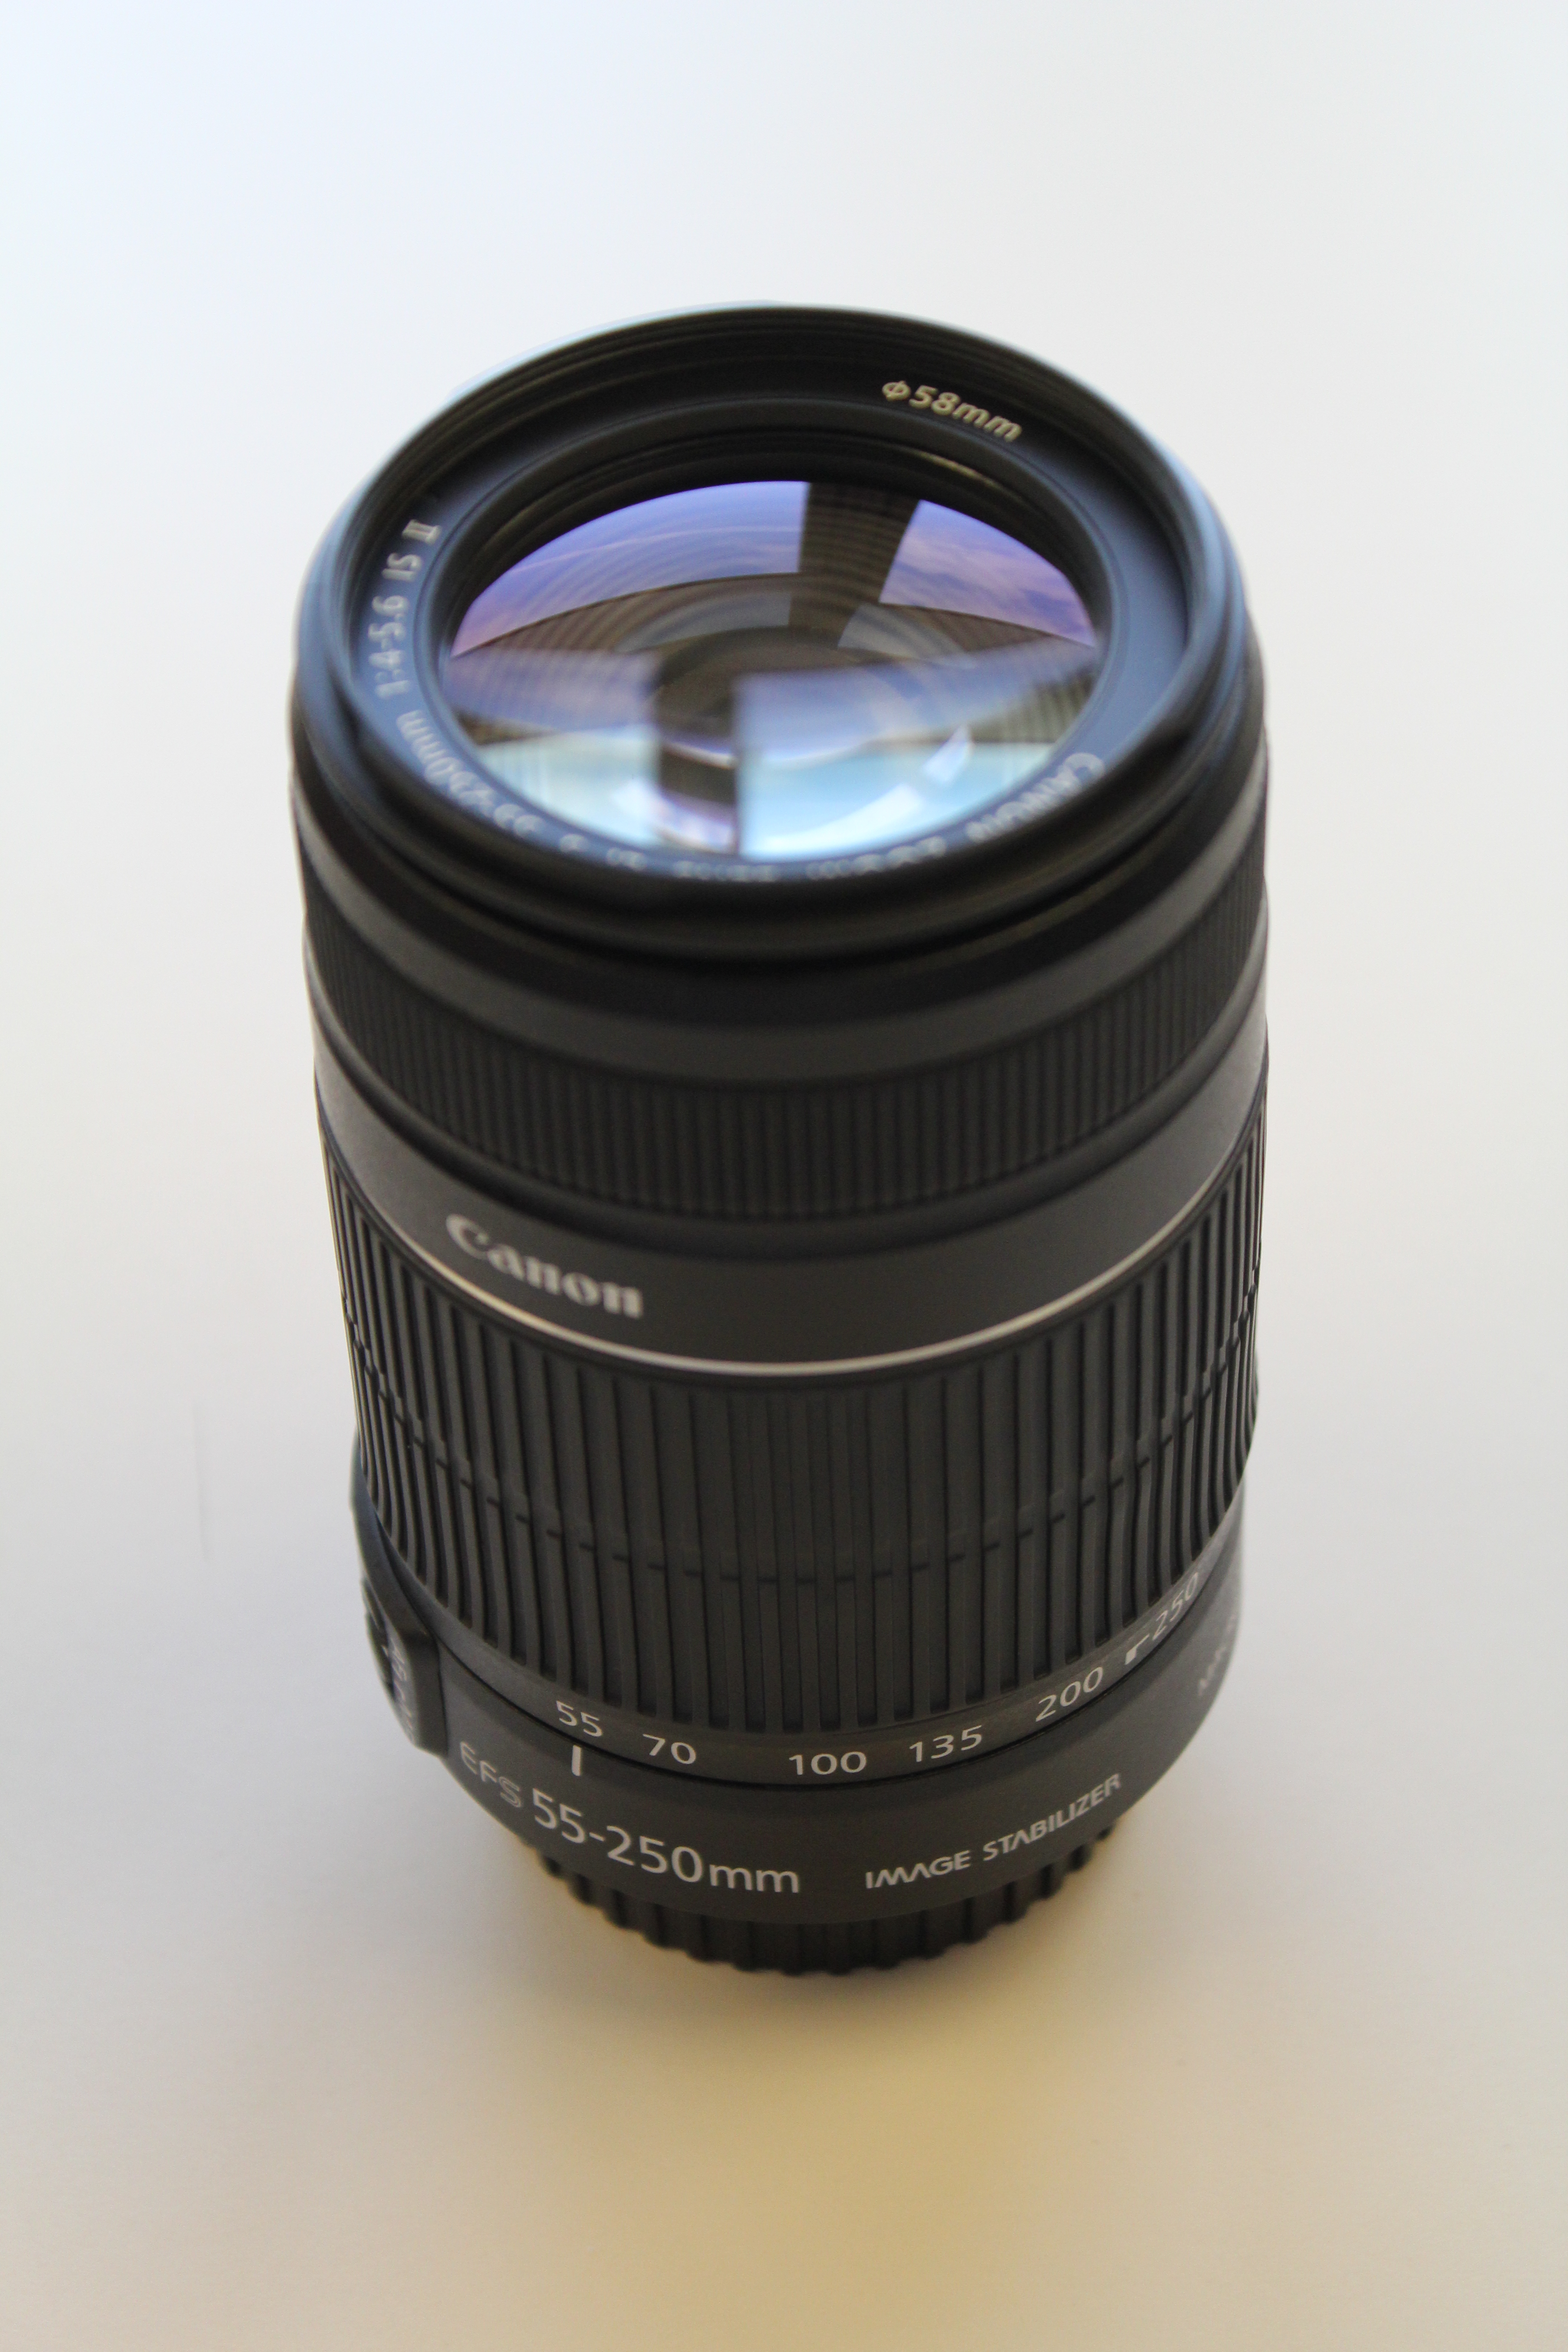 File:Canon EF-S 55-250 mm F4-5.6 IS II lens.JPG - Wikimedia Commons